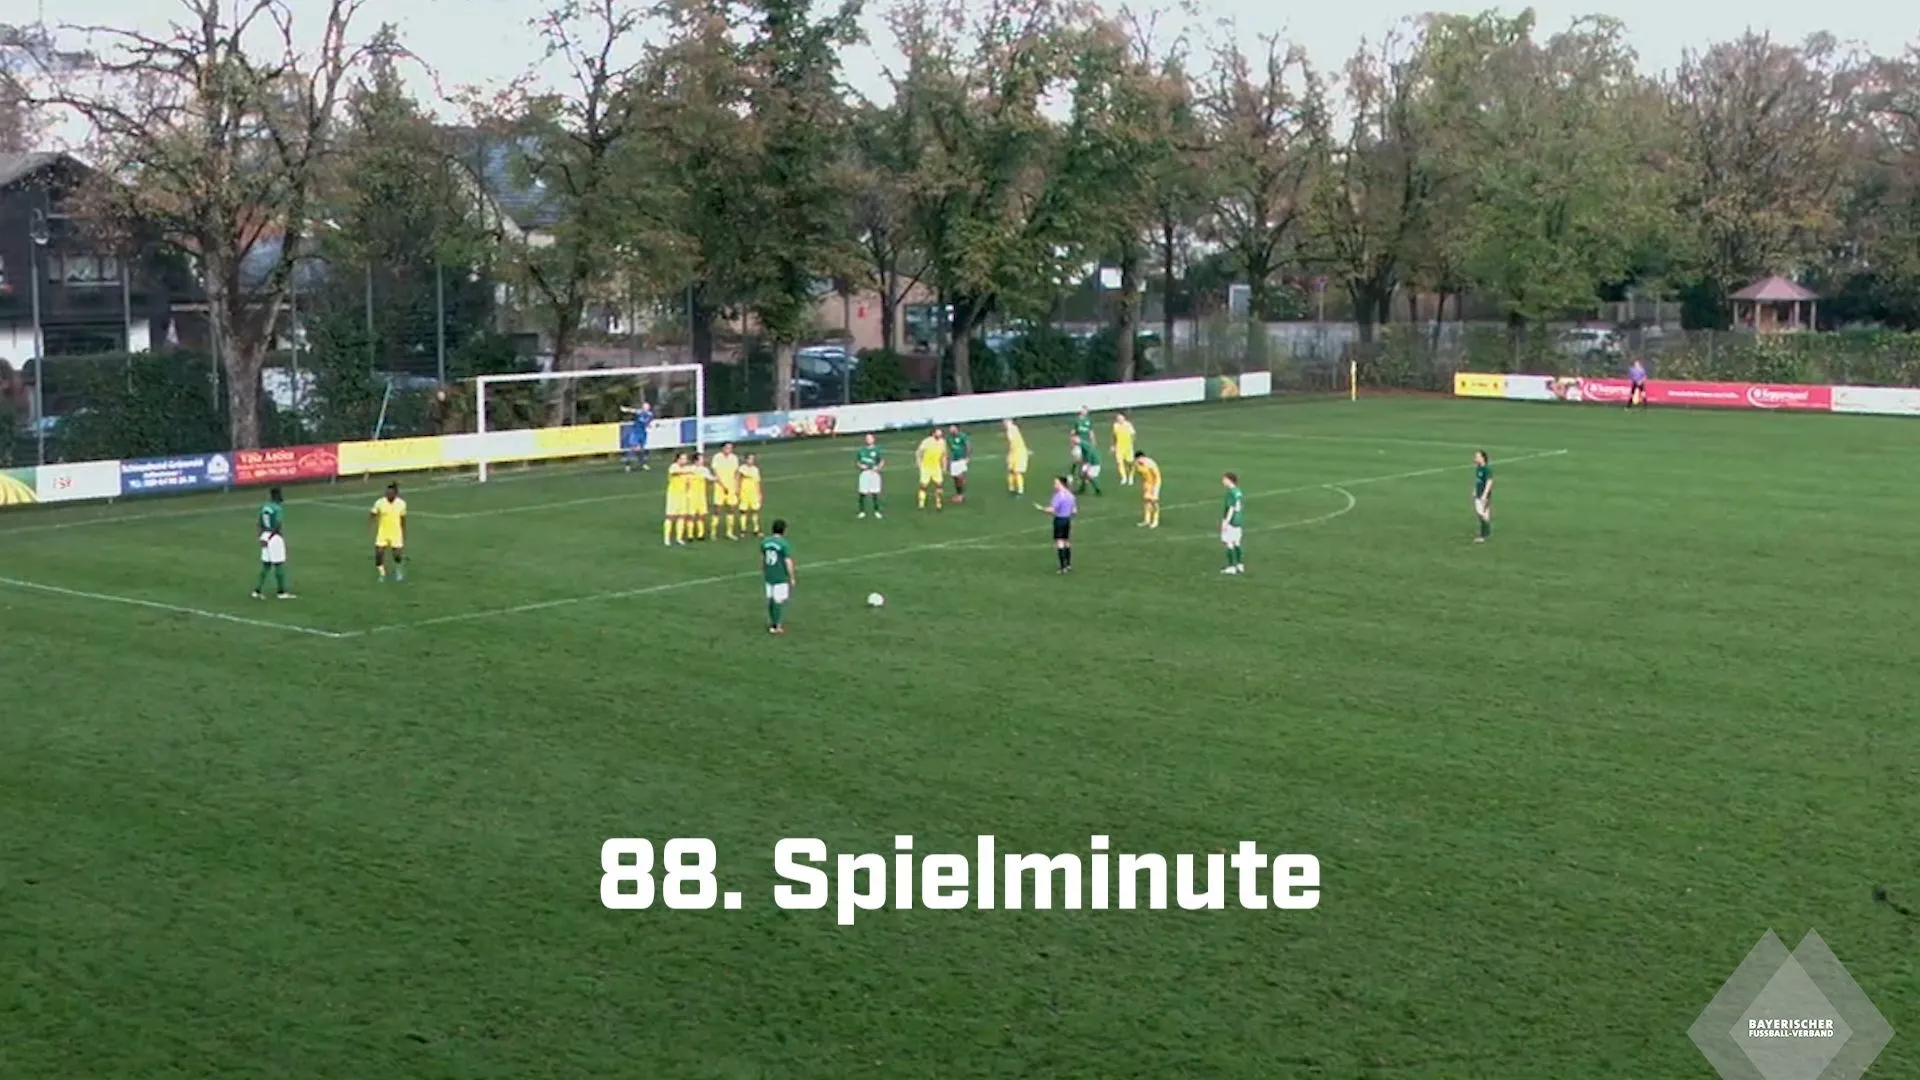 Crazy final minutes: Landesliga kicker sinks two identical free kicks in three minutes